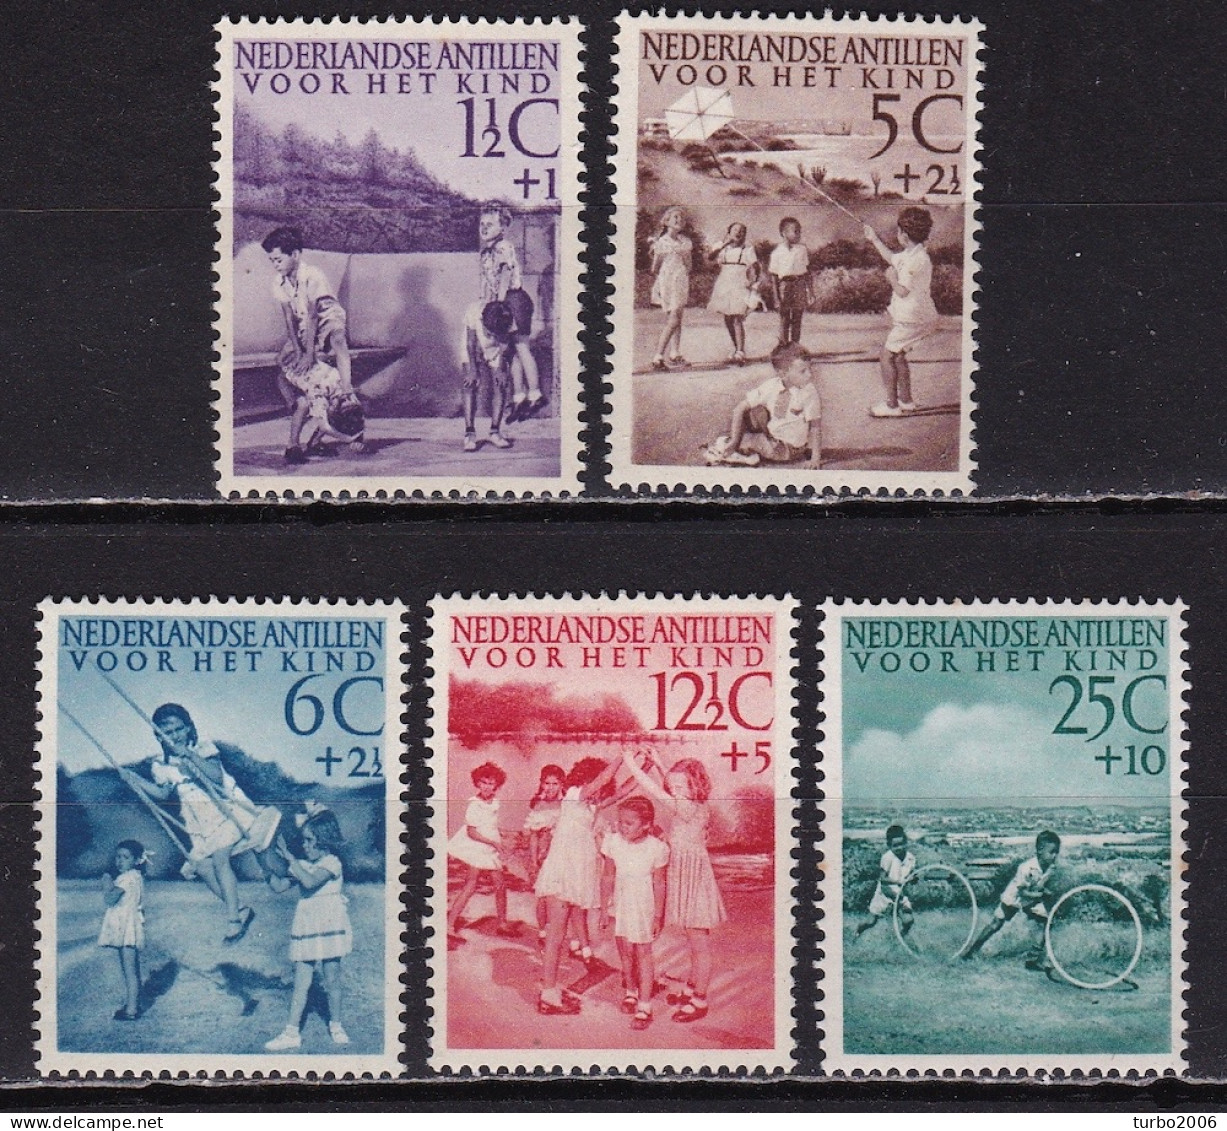 Ned. Antillen 1951 Kinderzegels Kinderspelen Complete Postfrisse Serie NVPH 234 / 238 - Curaçao, Antilles Neérlandaises, Aruba